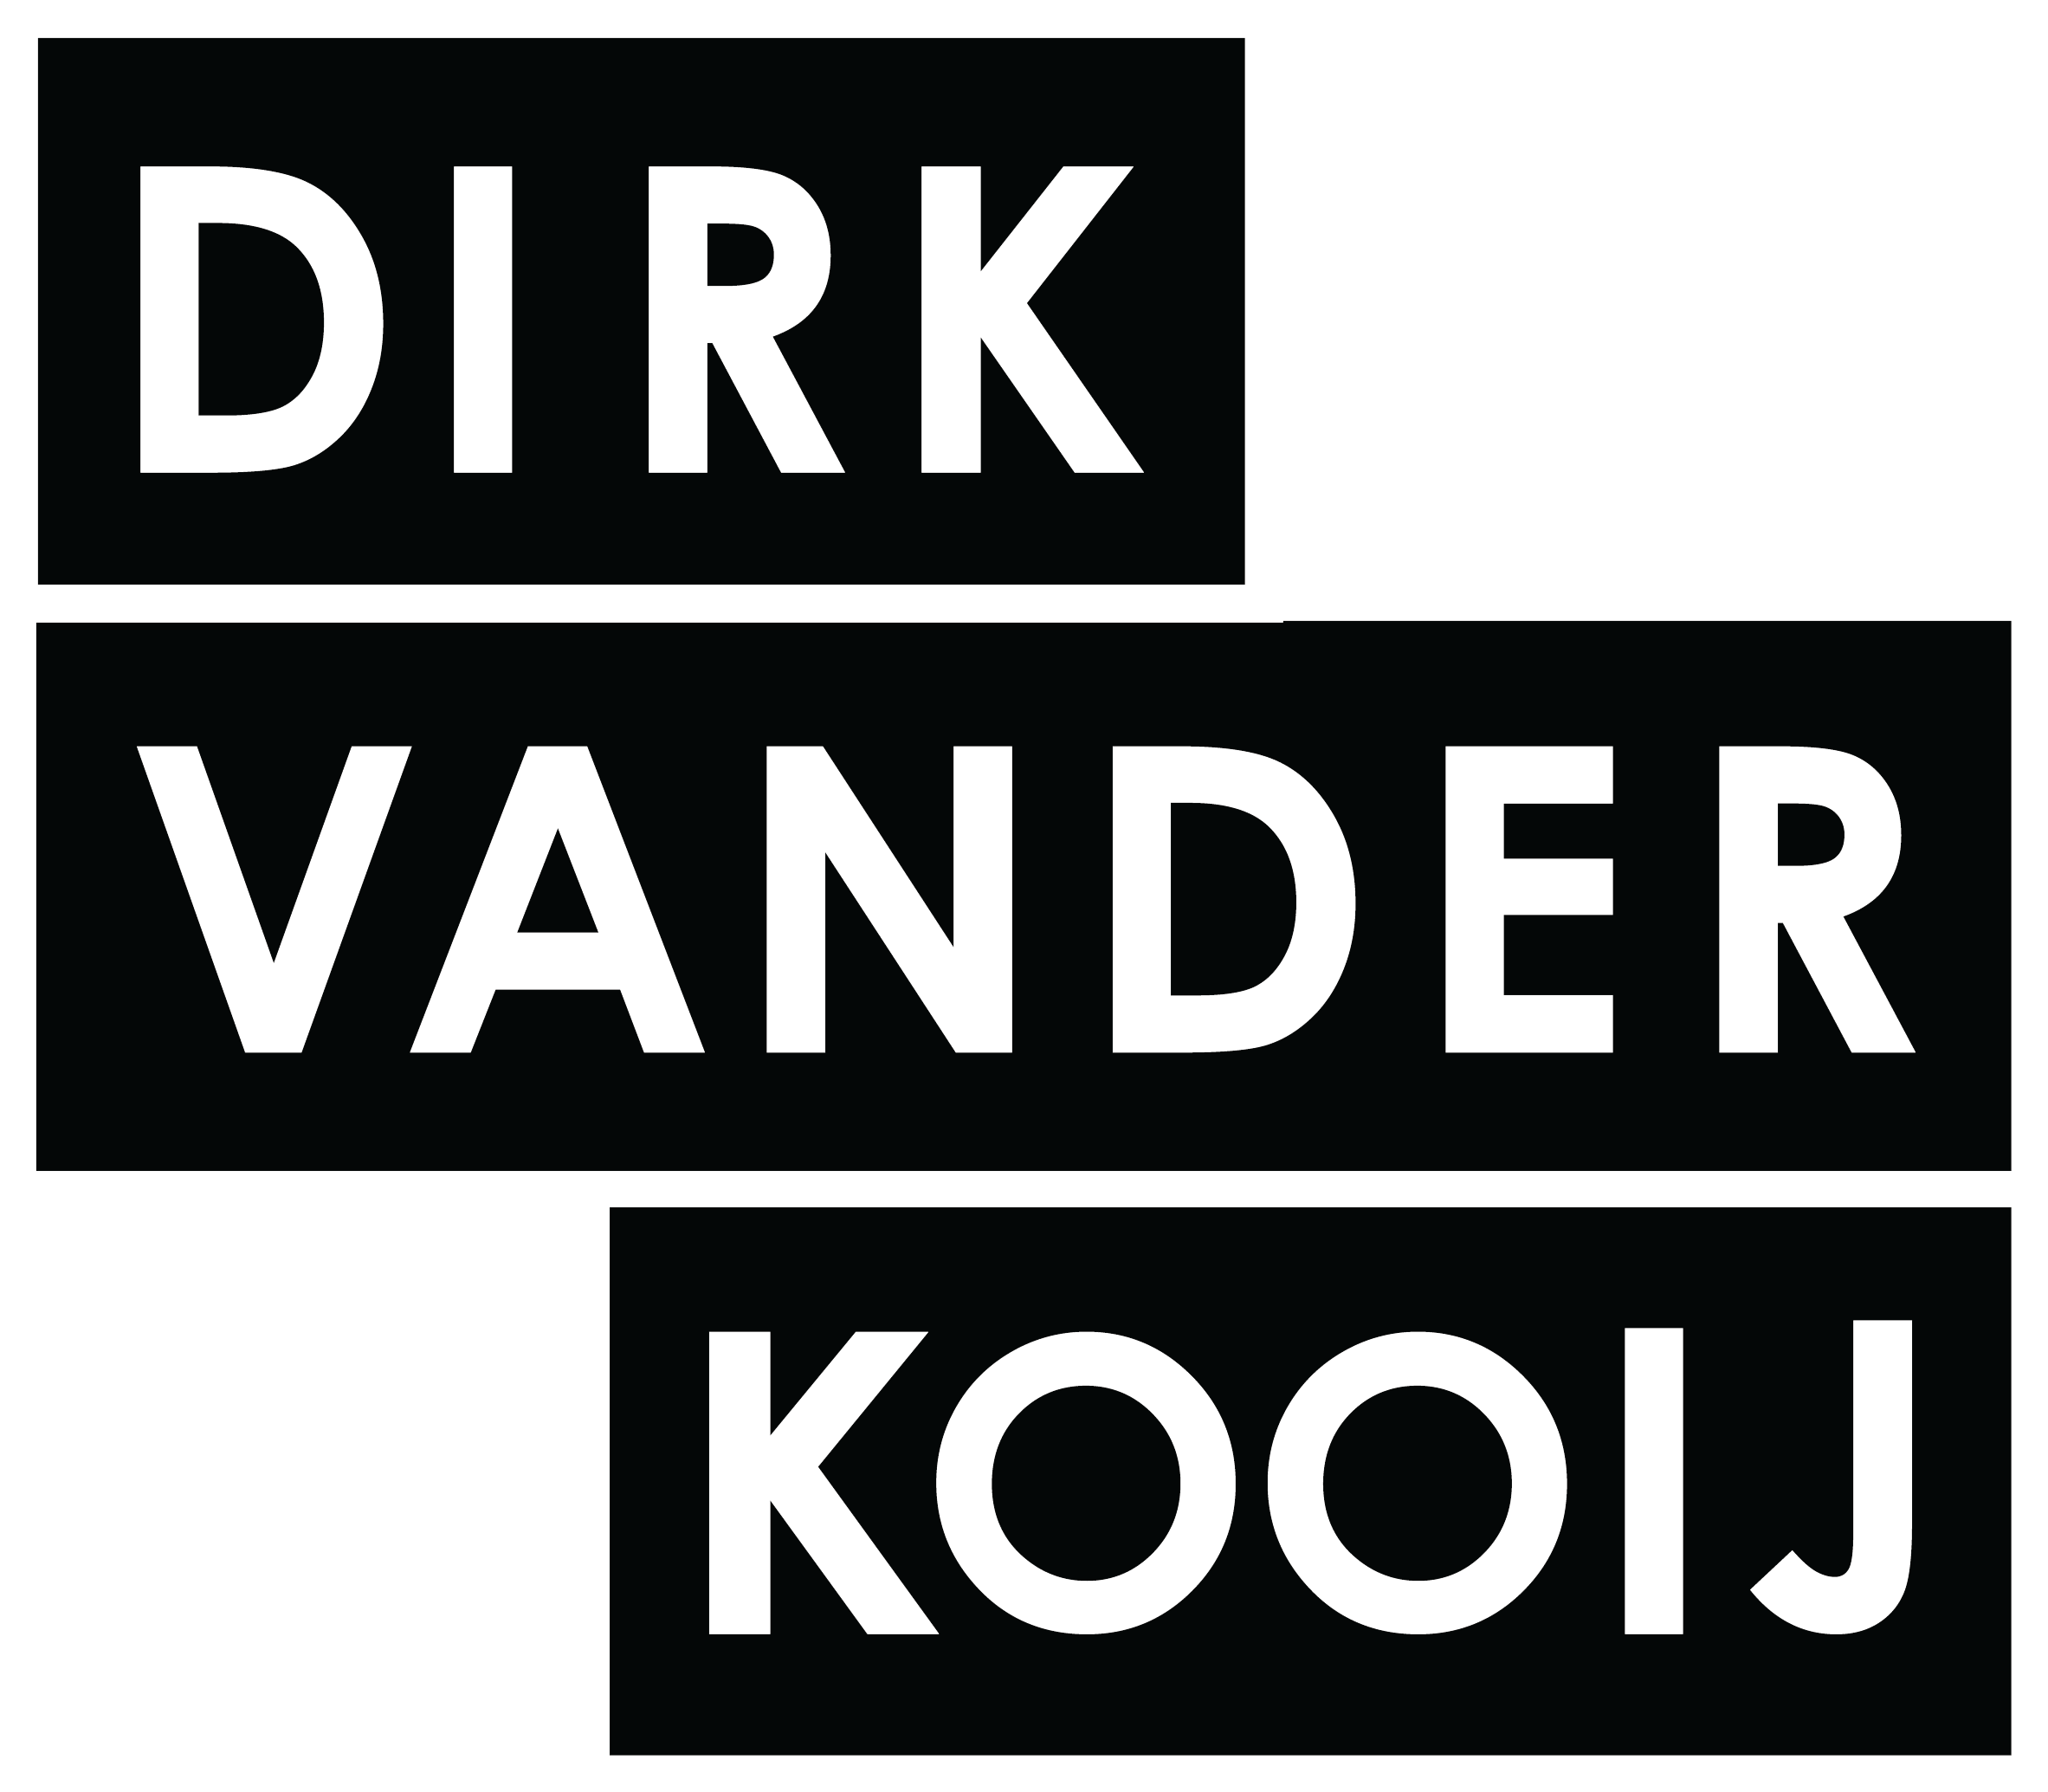 Dirk vander kooij logo transparant